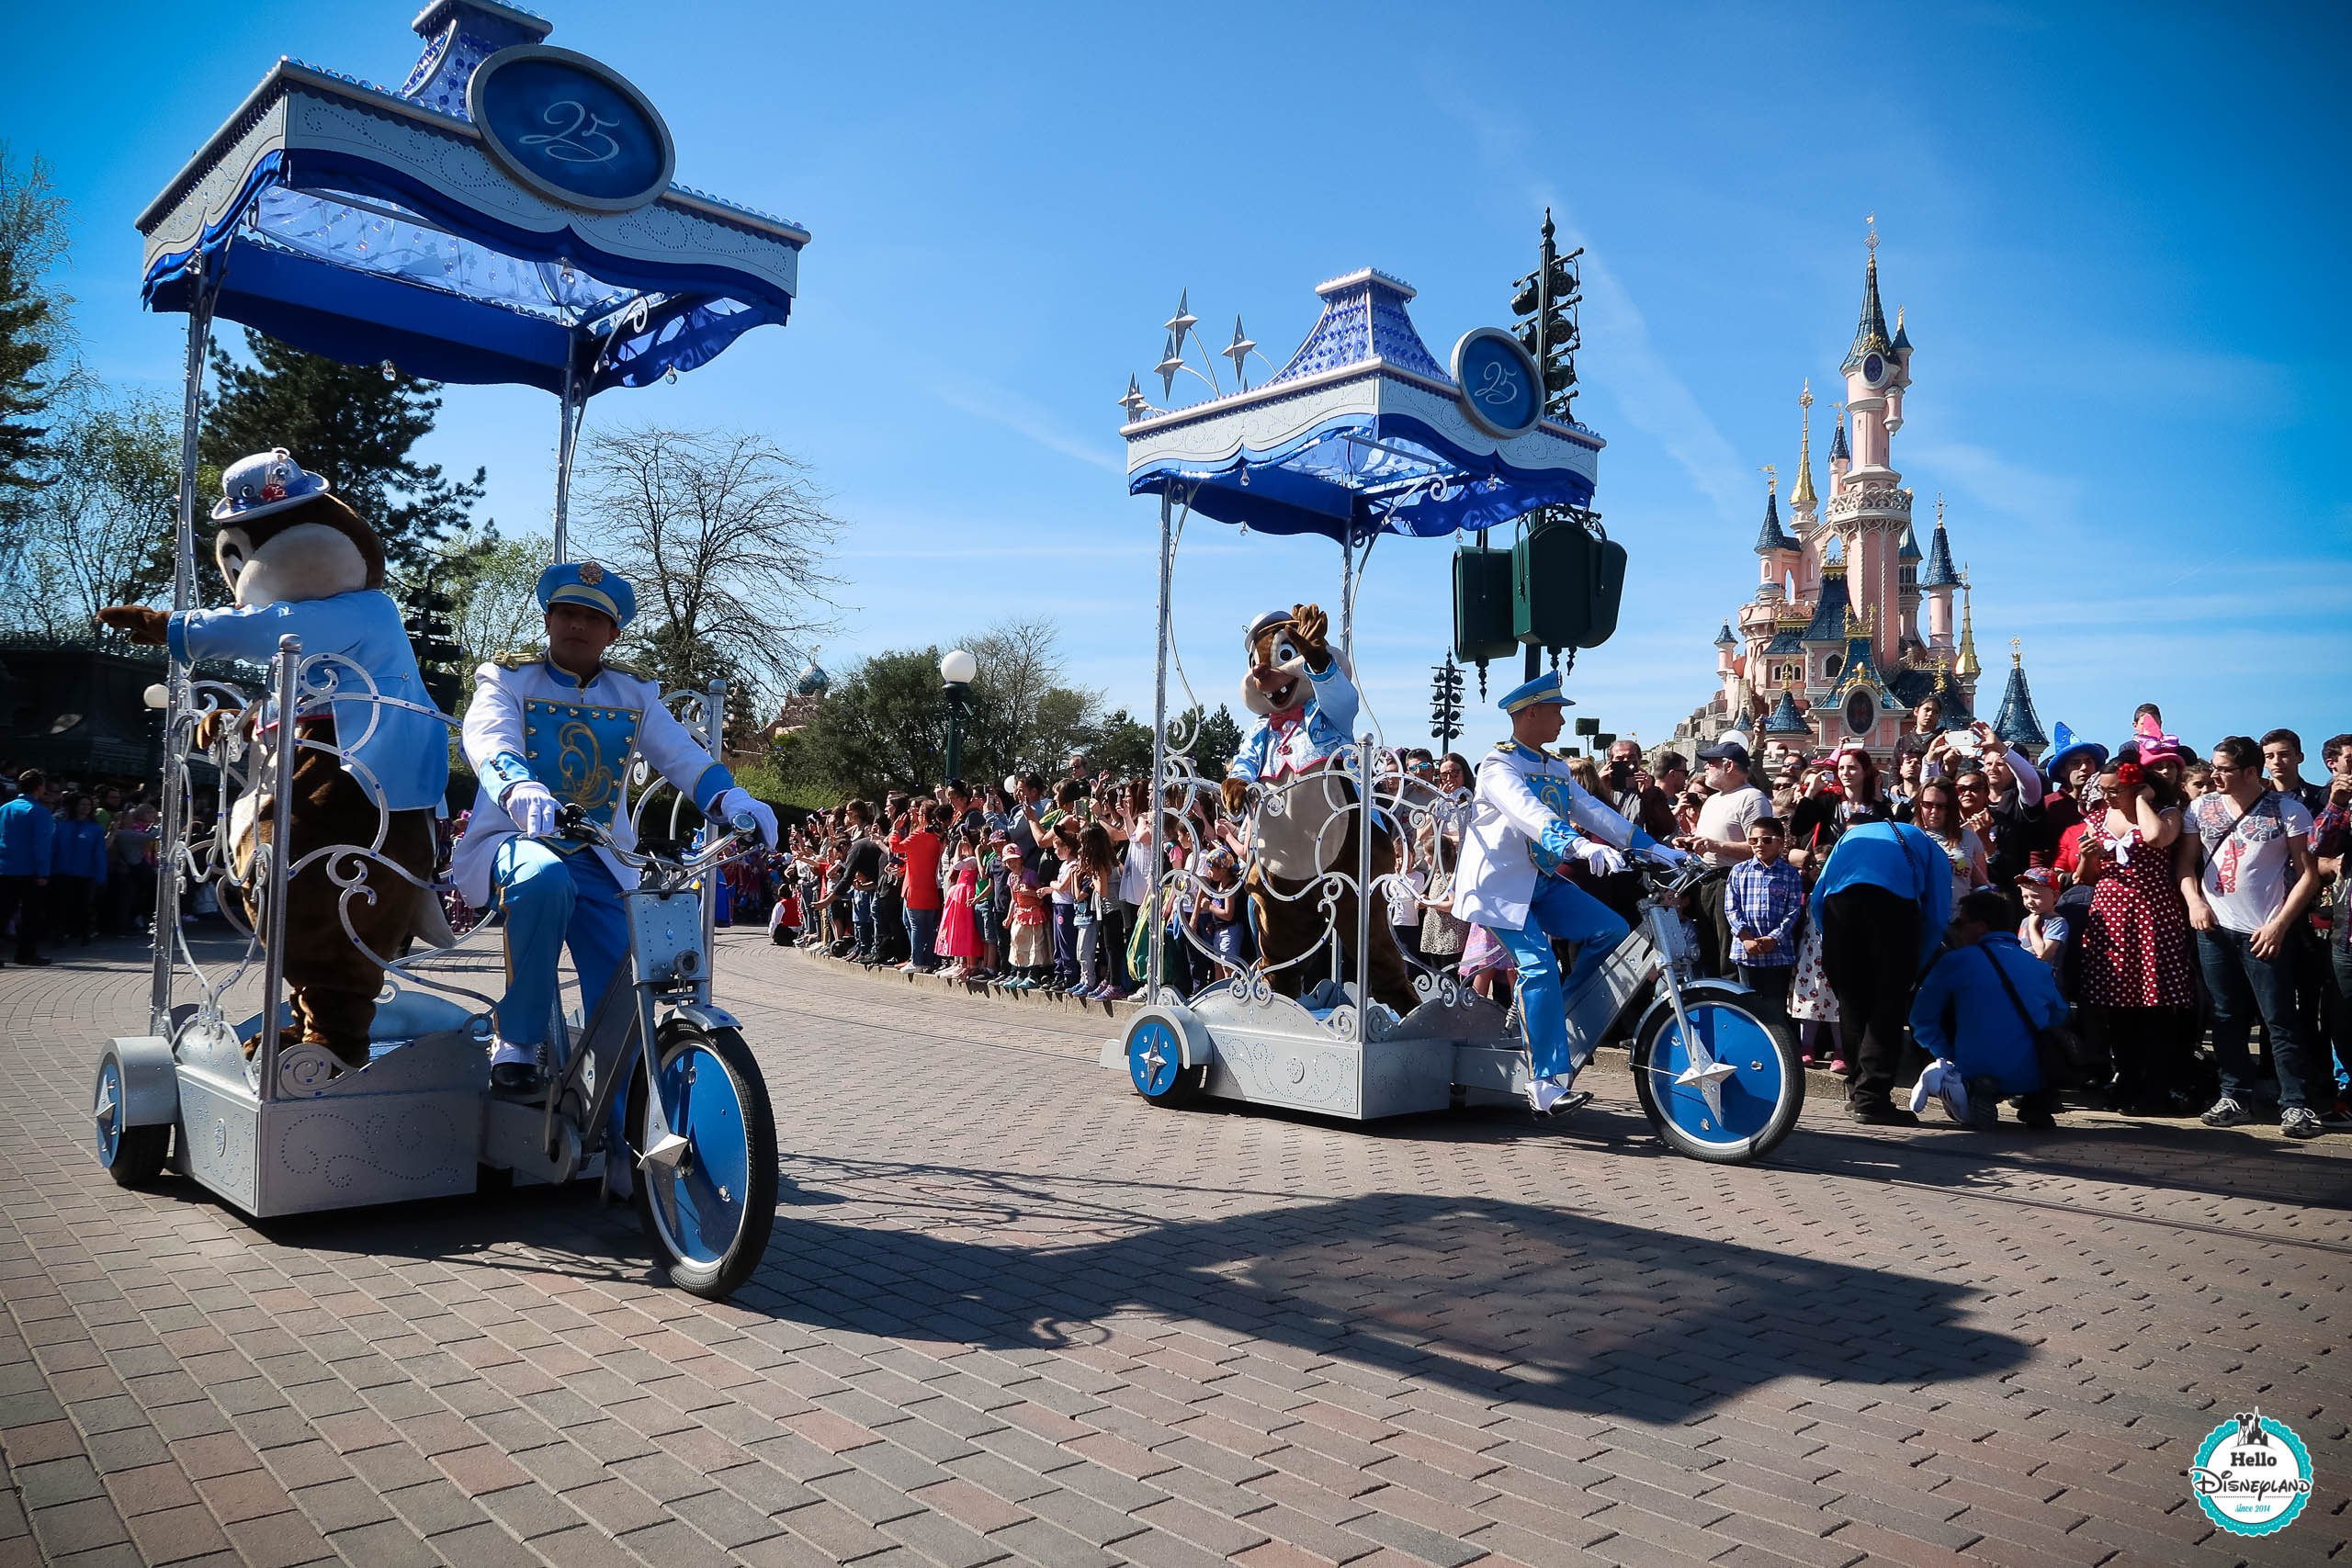 12 avril 2017 - Disneyland Paris 25 ans